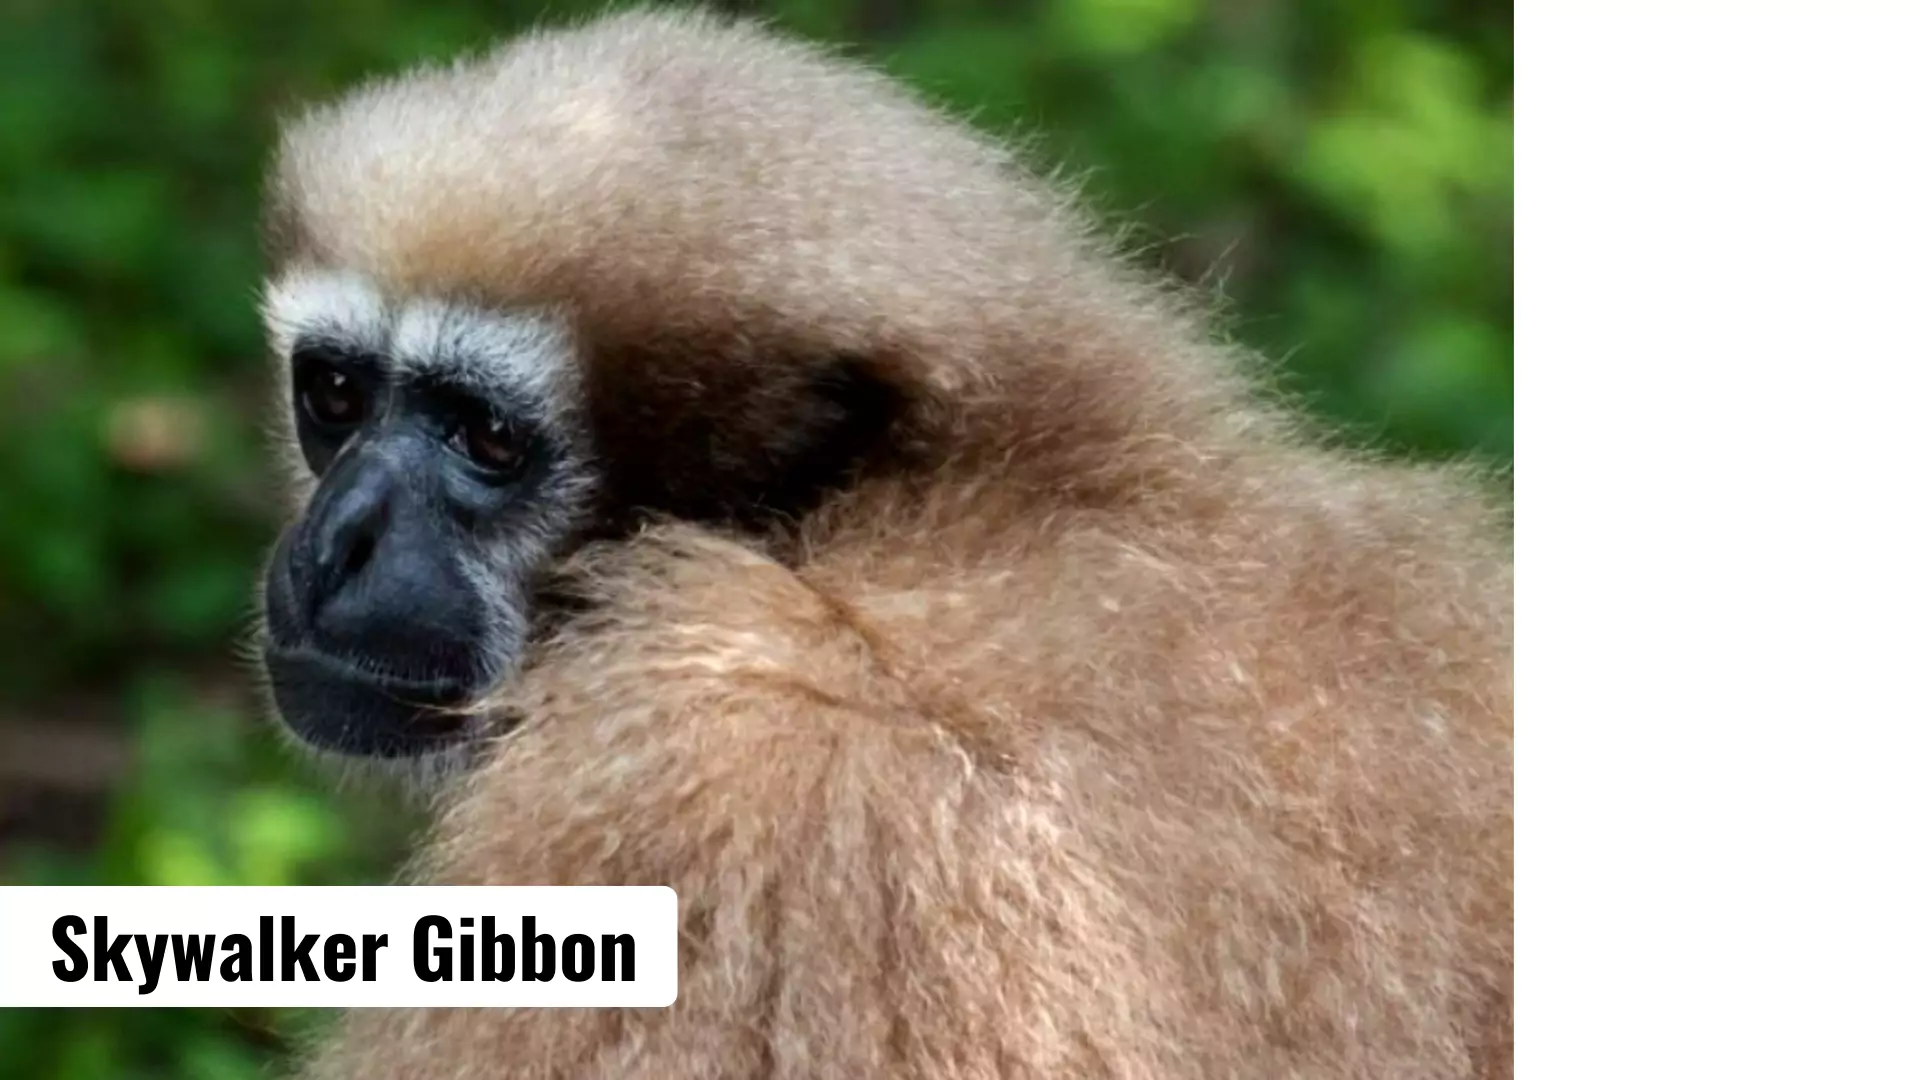 Skywalker Gibbon